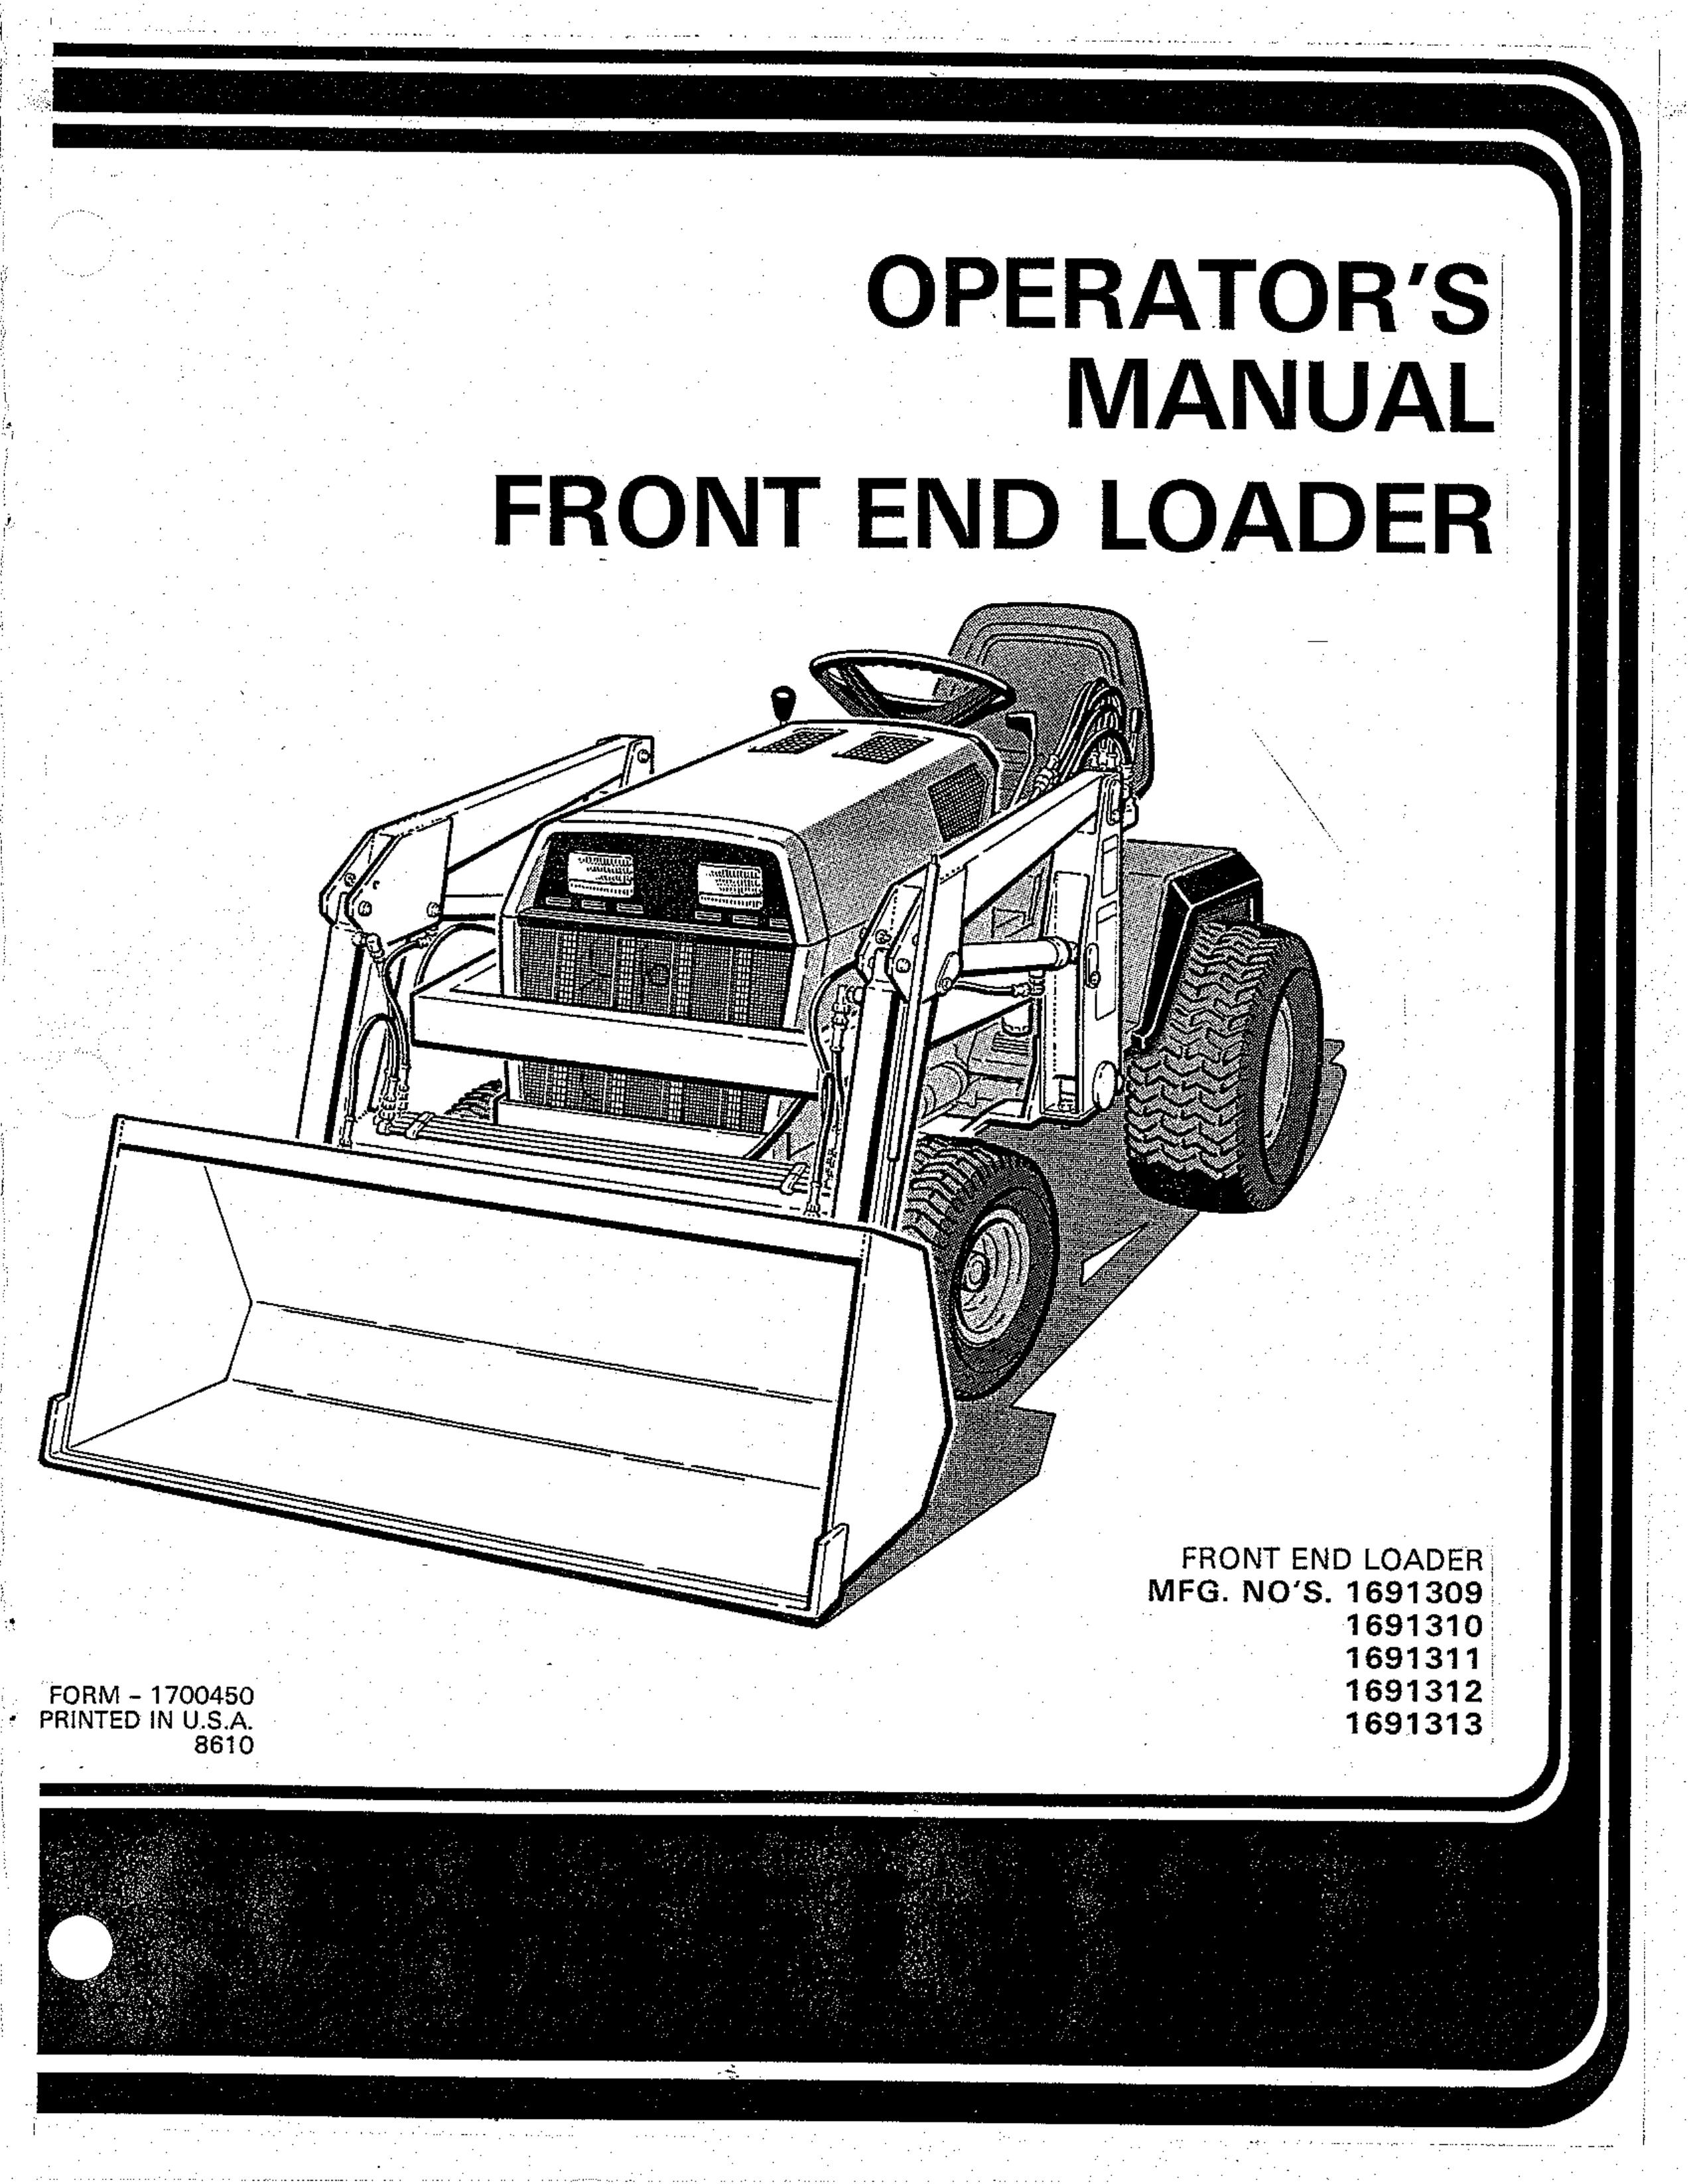 Snapper 1691312 Compact Loader User Manual